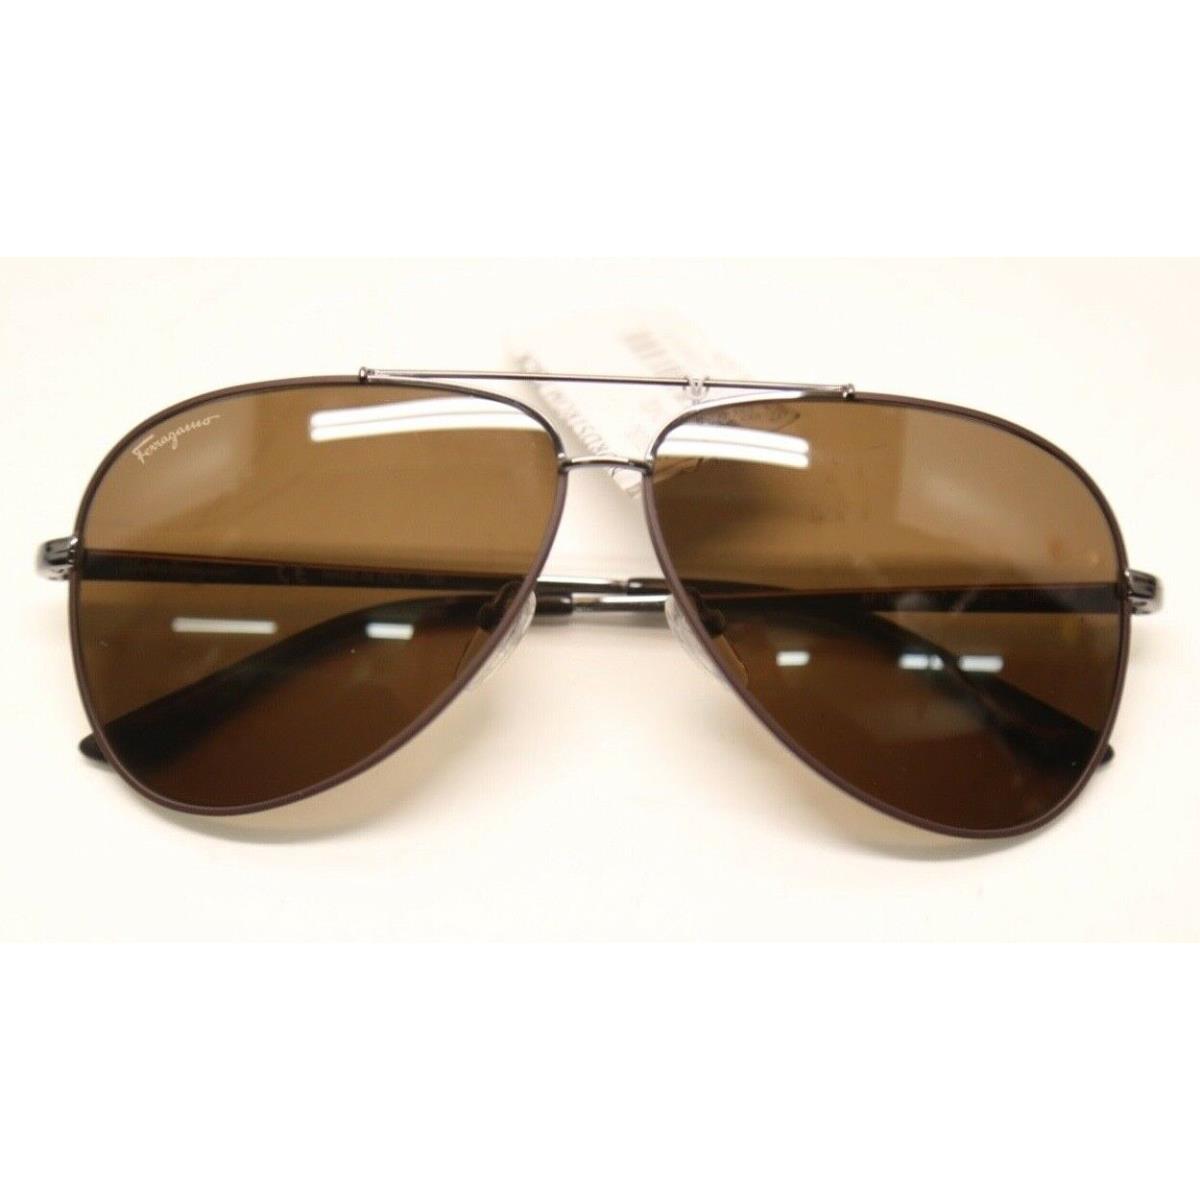 Salvatore Ferragamo sunglasses  - Shiny Gunmetal Frame, Cocoa Lens 5